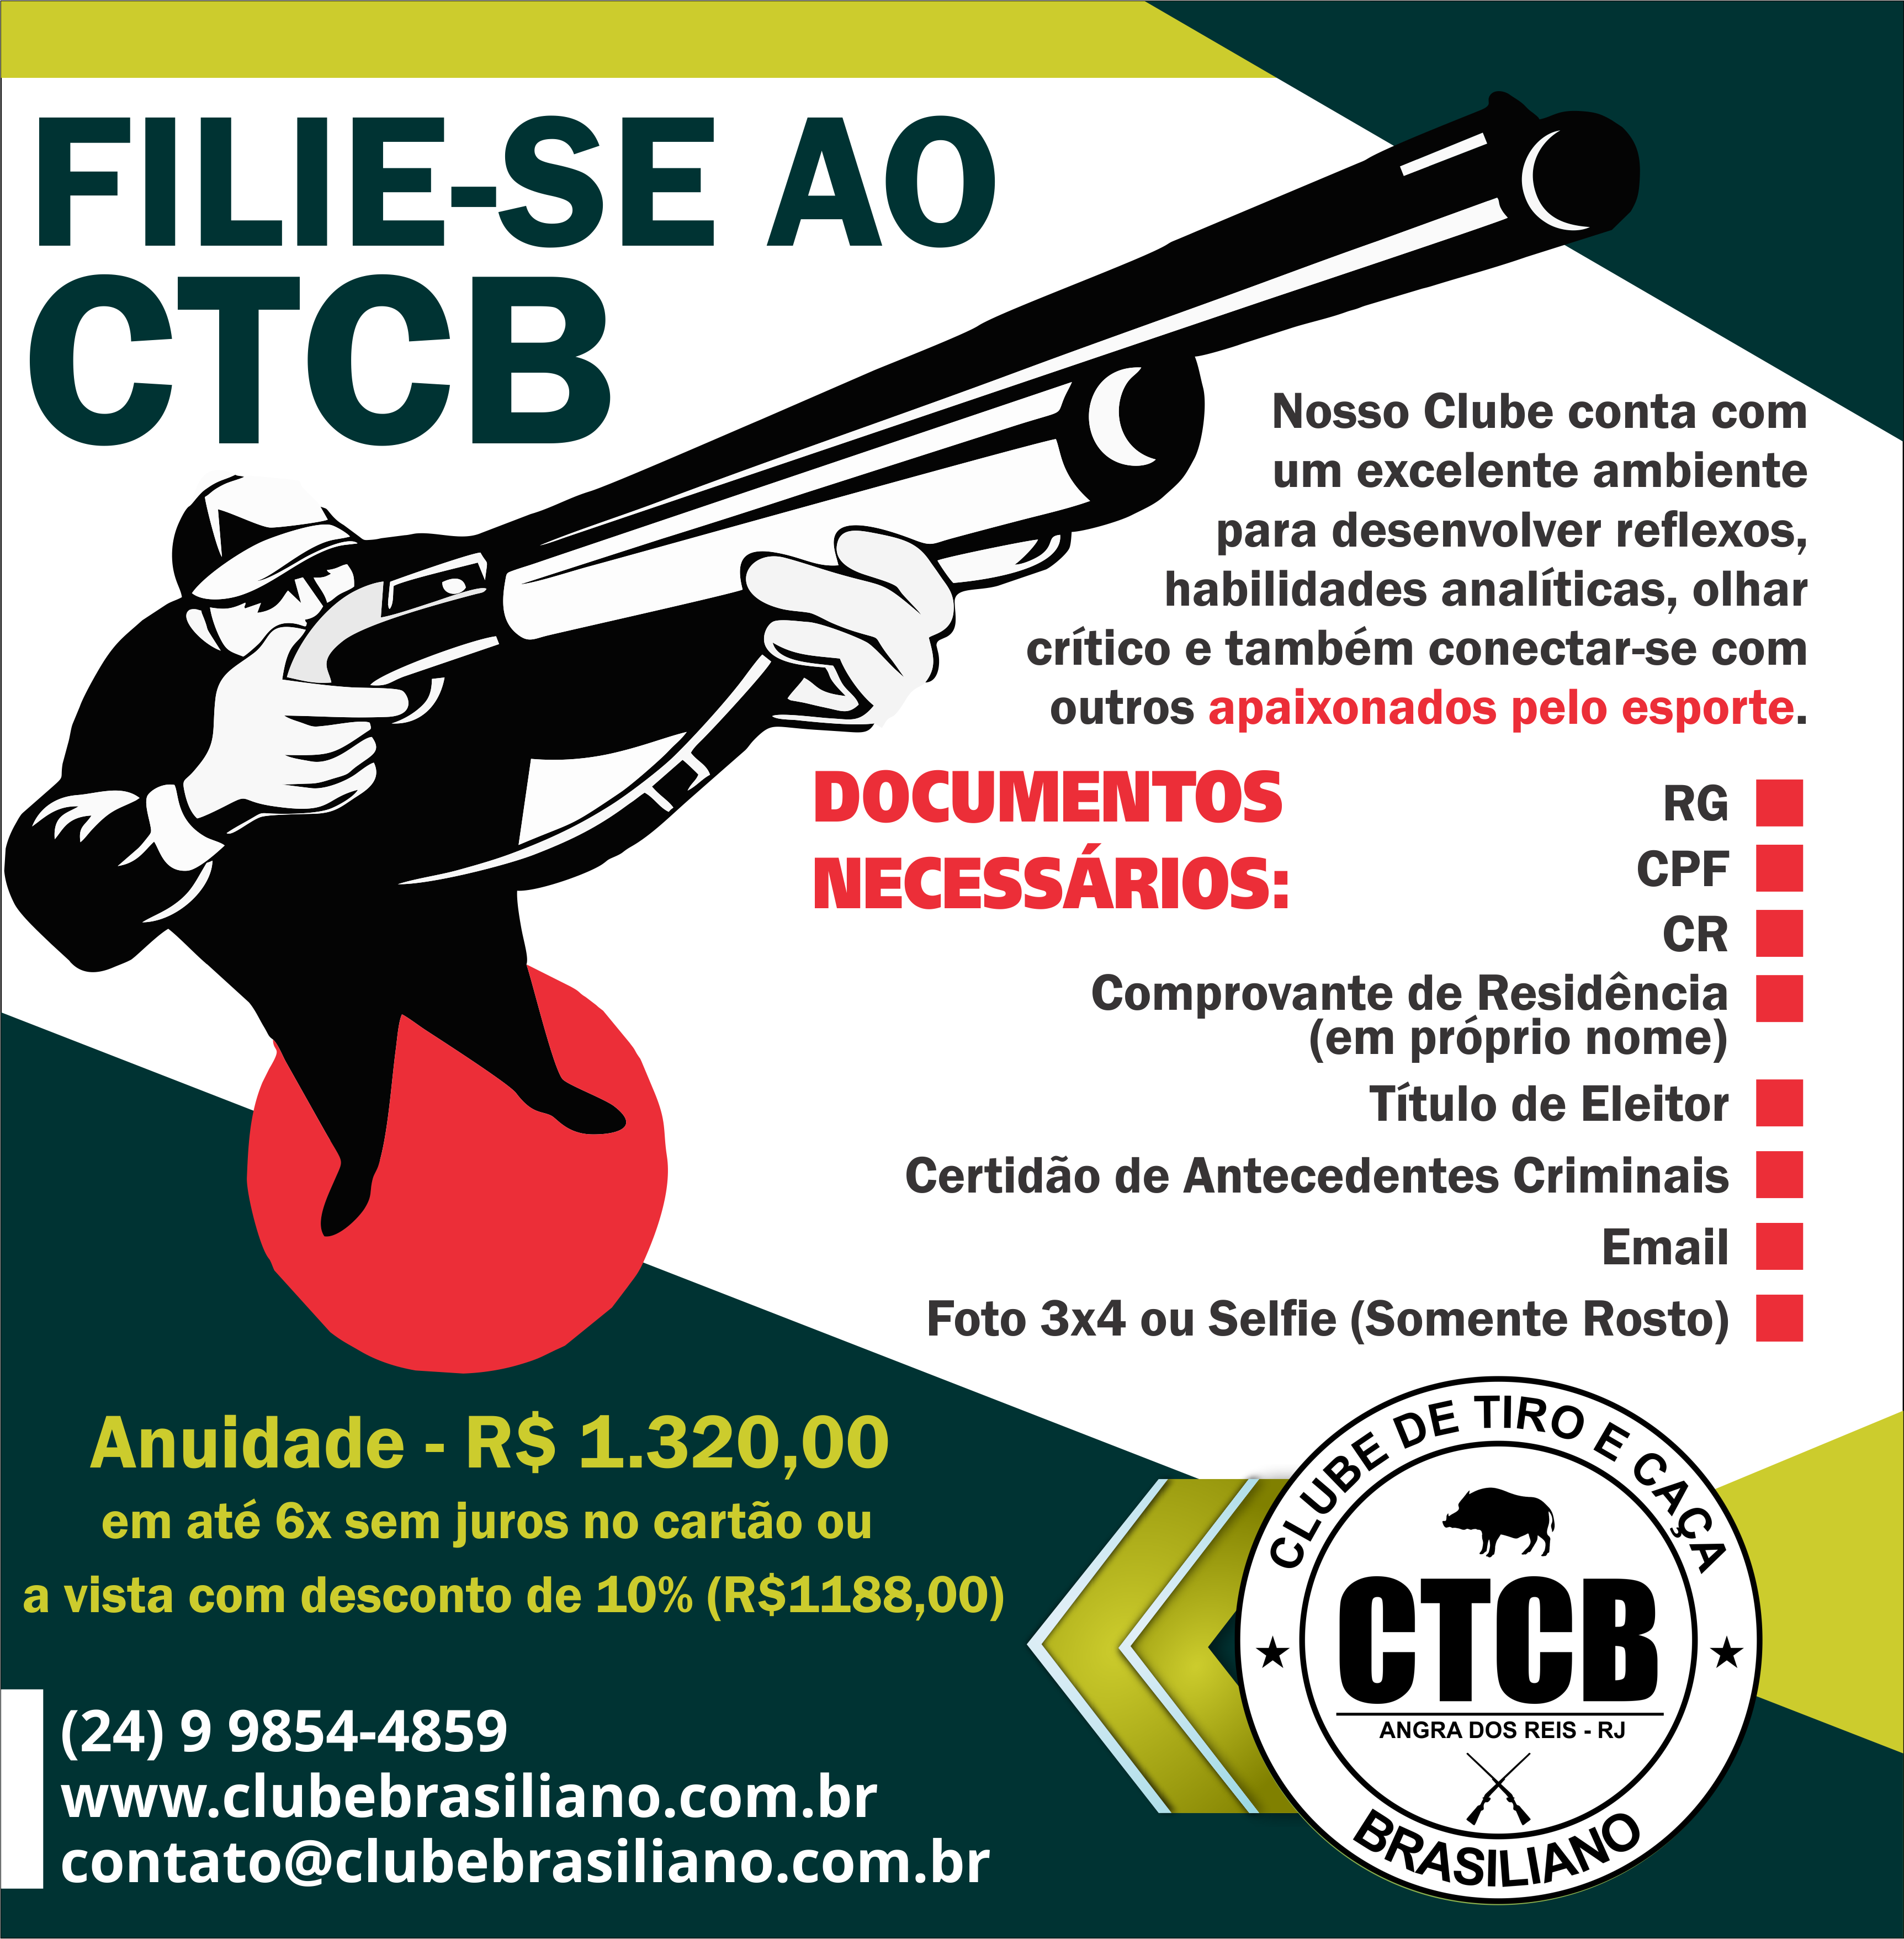 FILIE-SE AO CTCB 05-23